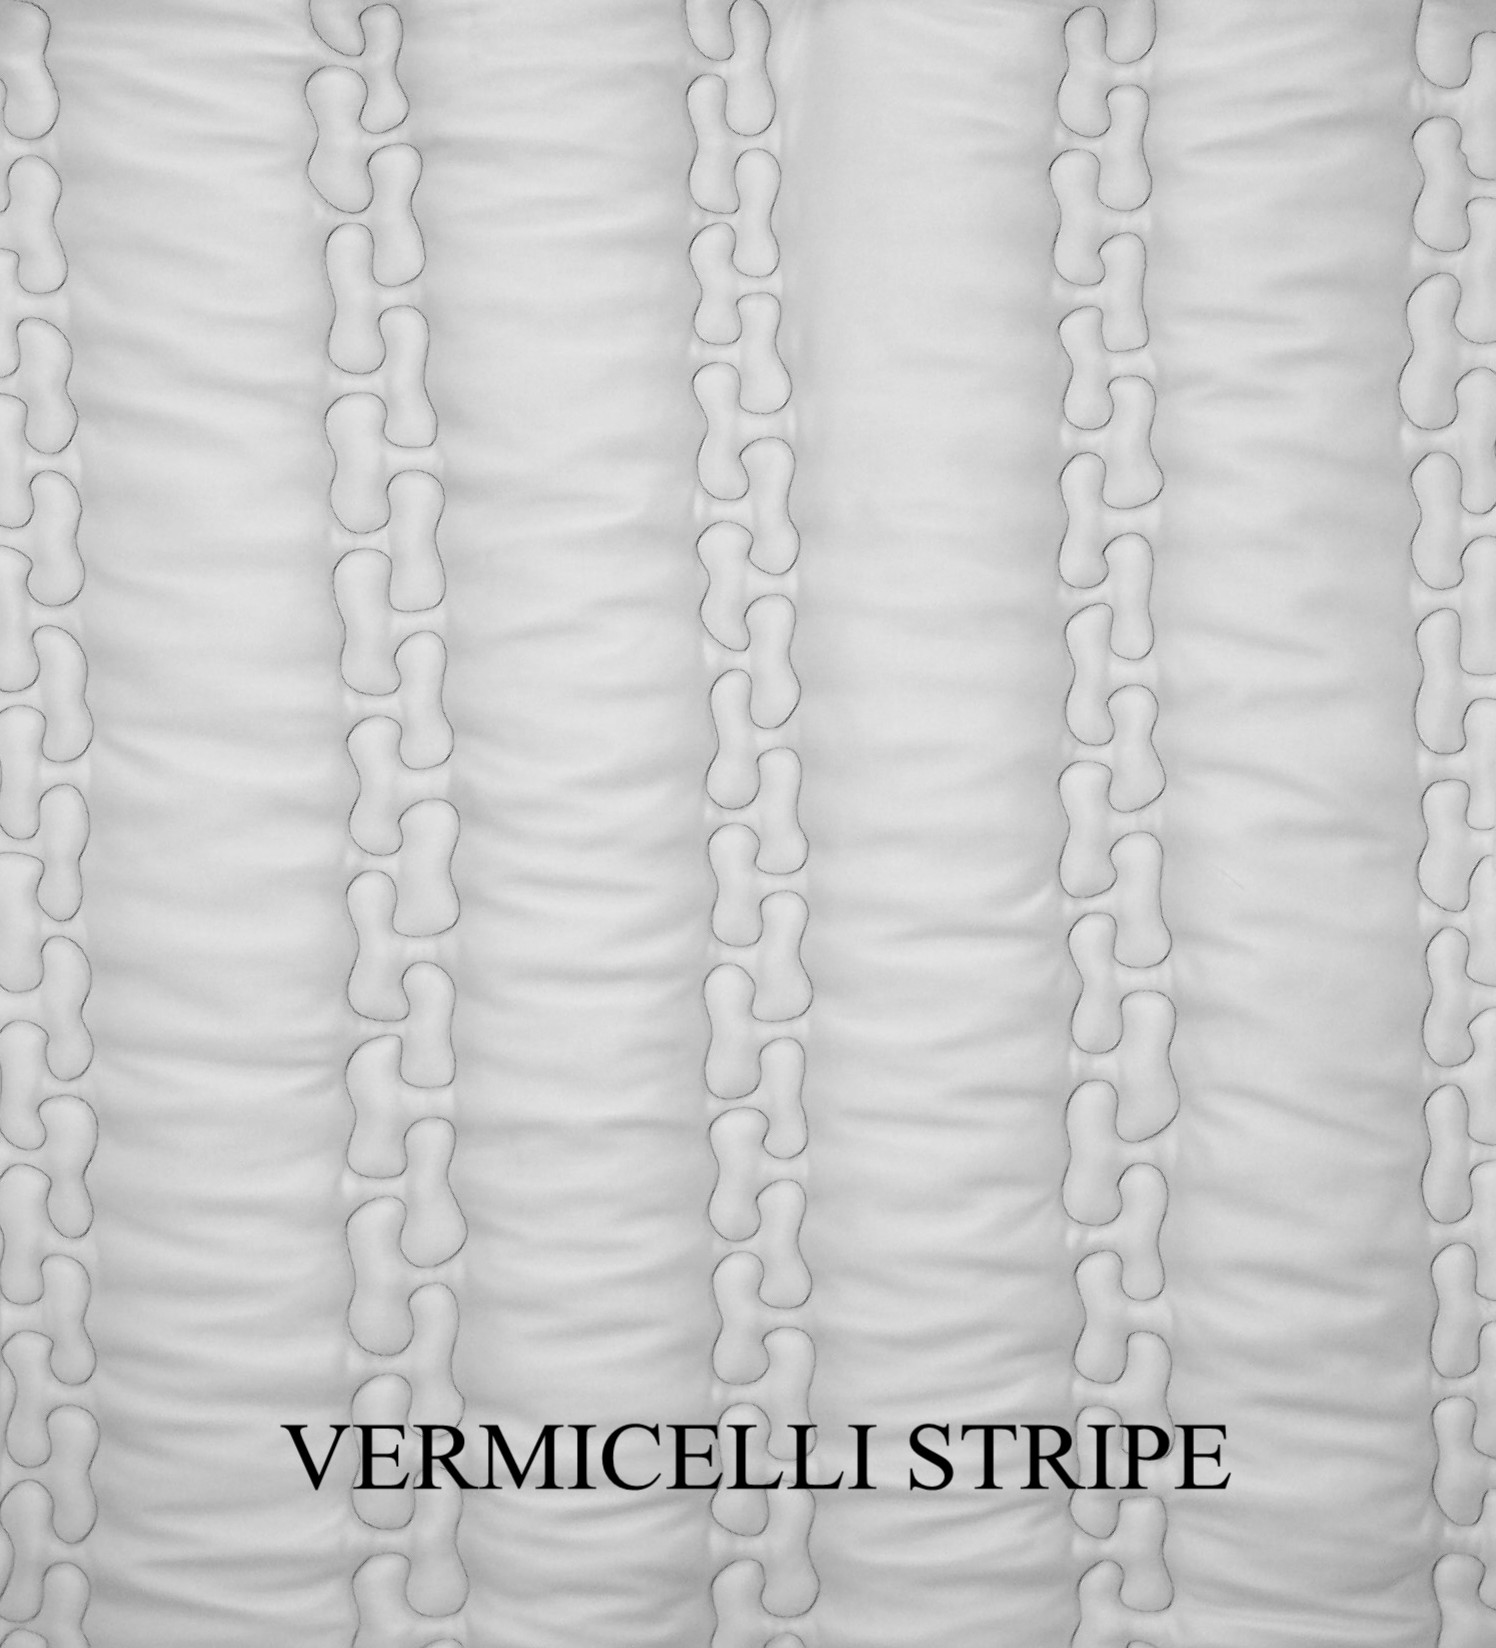 Vermicelli Stripe Quilting